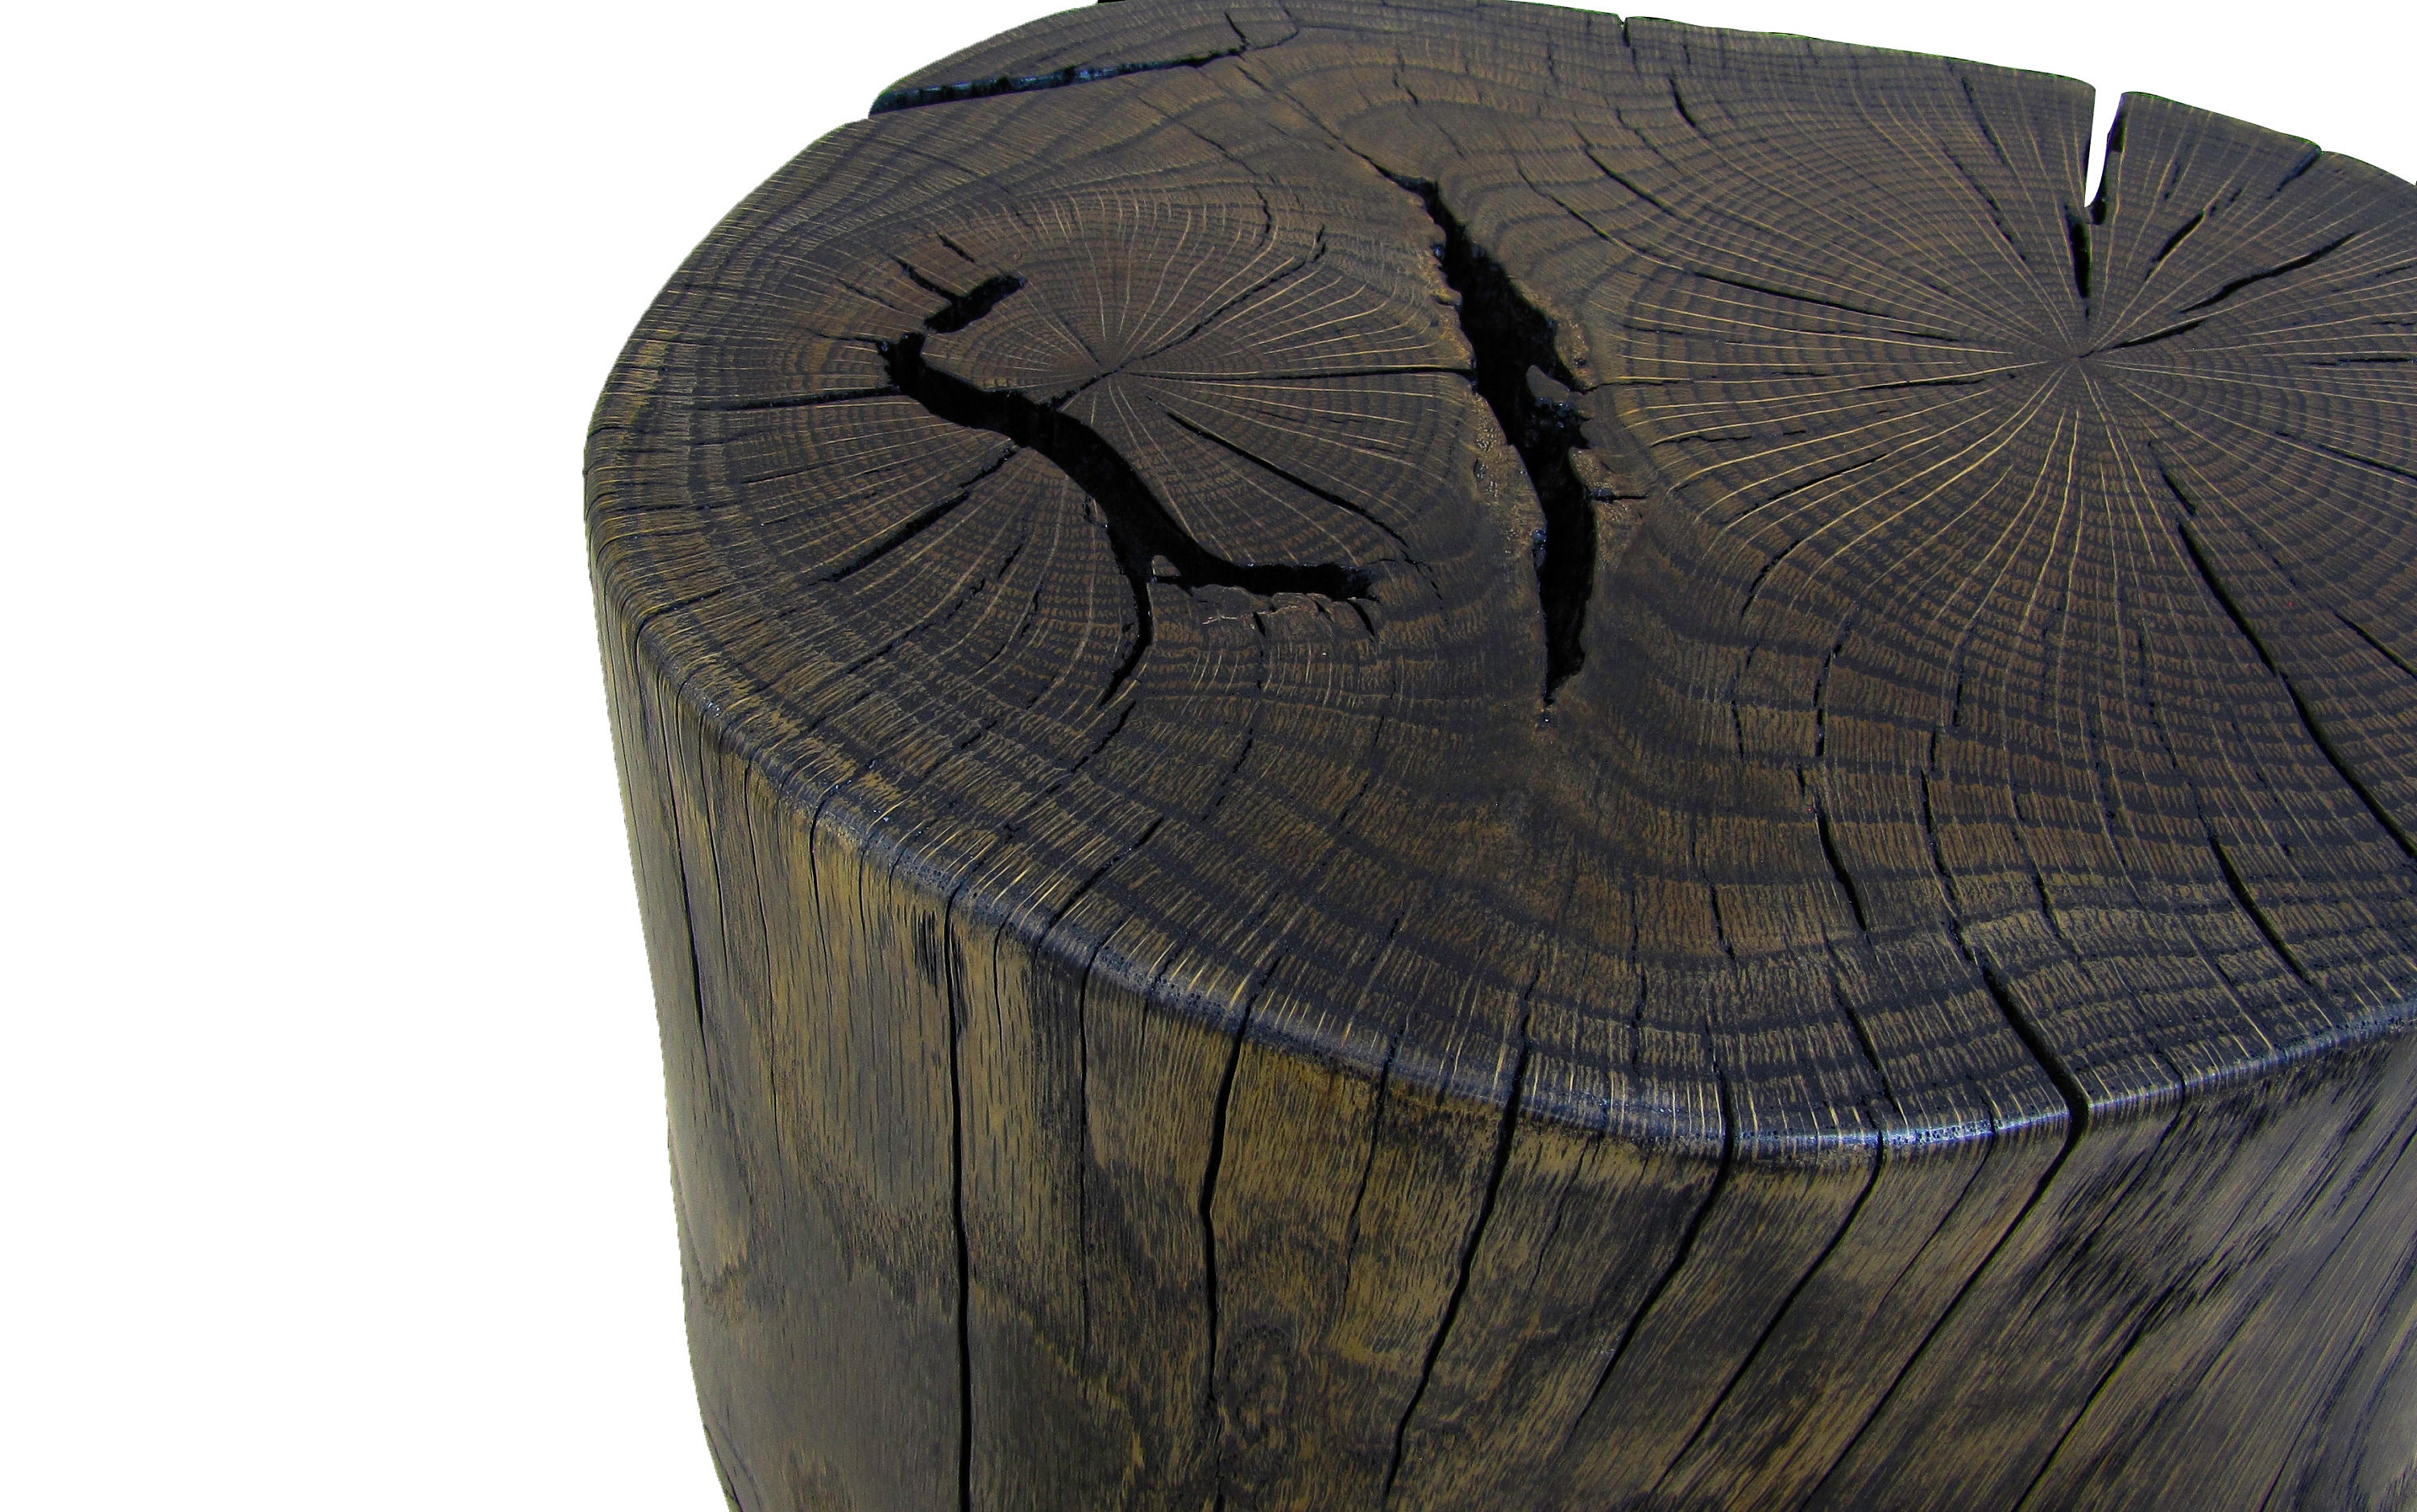 Table Size Epoxy Mold, Stumps Custom Wood